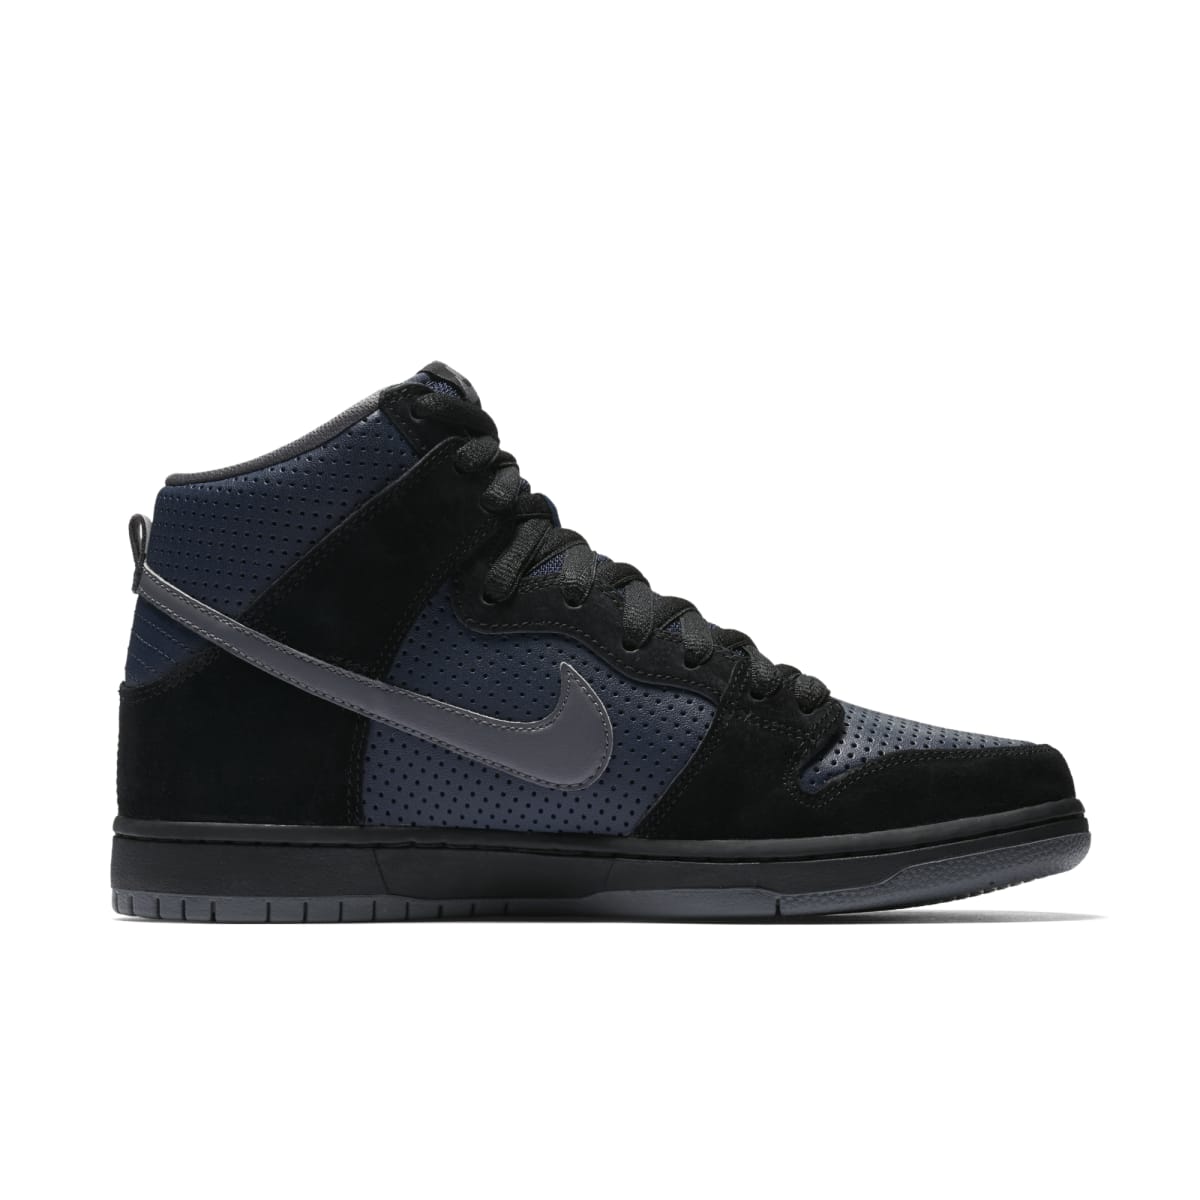 Gino Iannucci x Nike SB Dunk High | Nike | Release Dates, Sneaker 